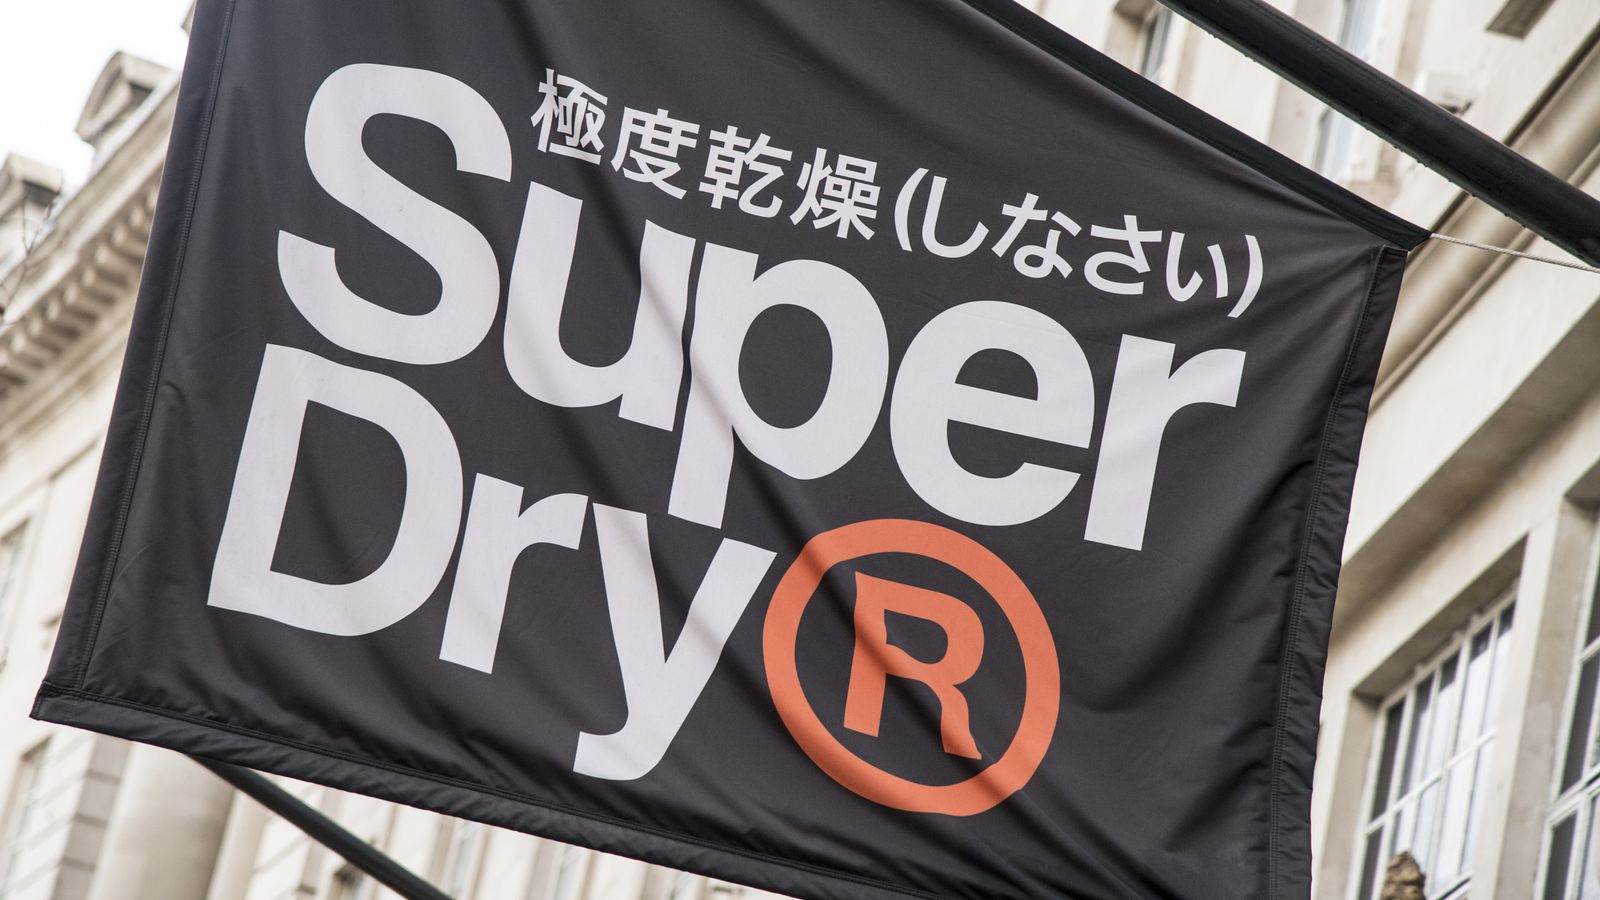 Superdry founder eyes Rcapital backing for takeover bid